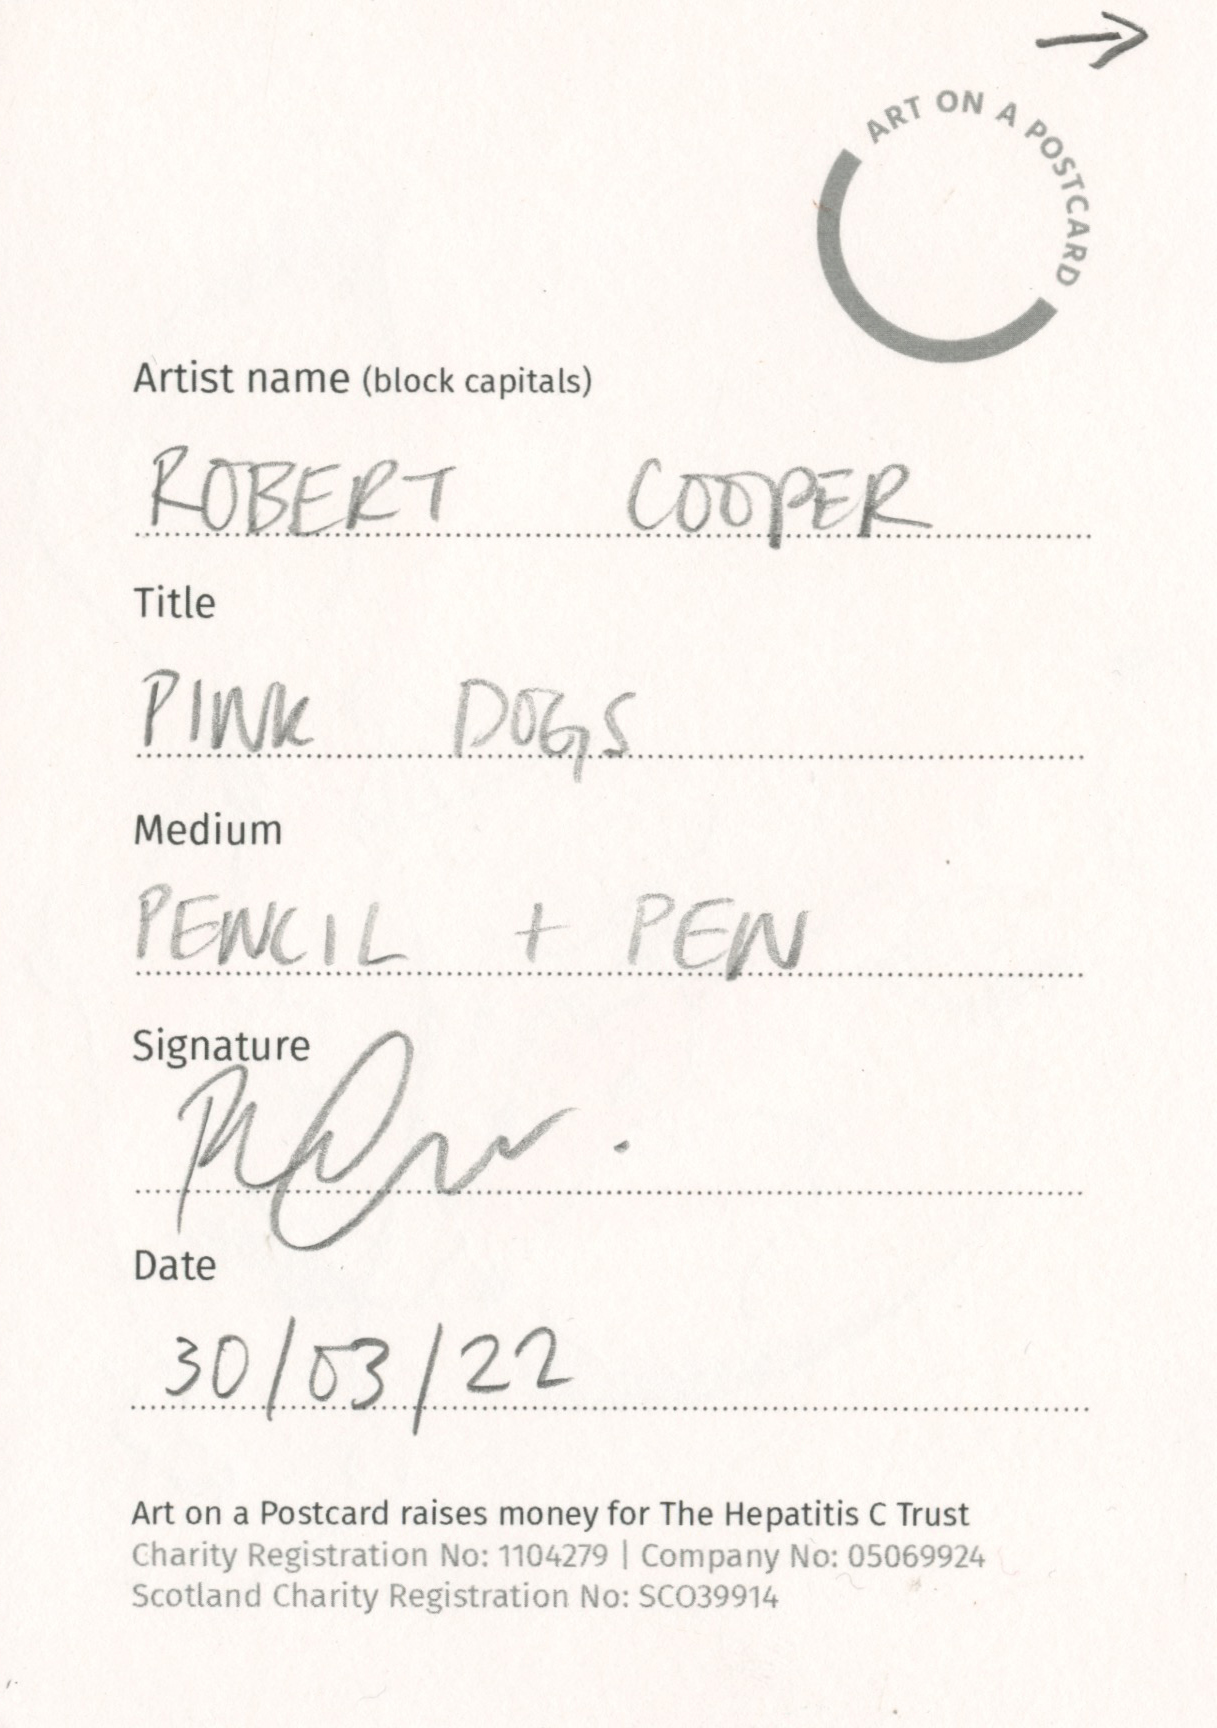 80. Robert Cooper - Pink Dogs - BACK